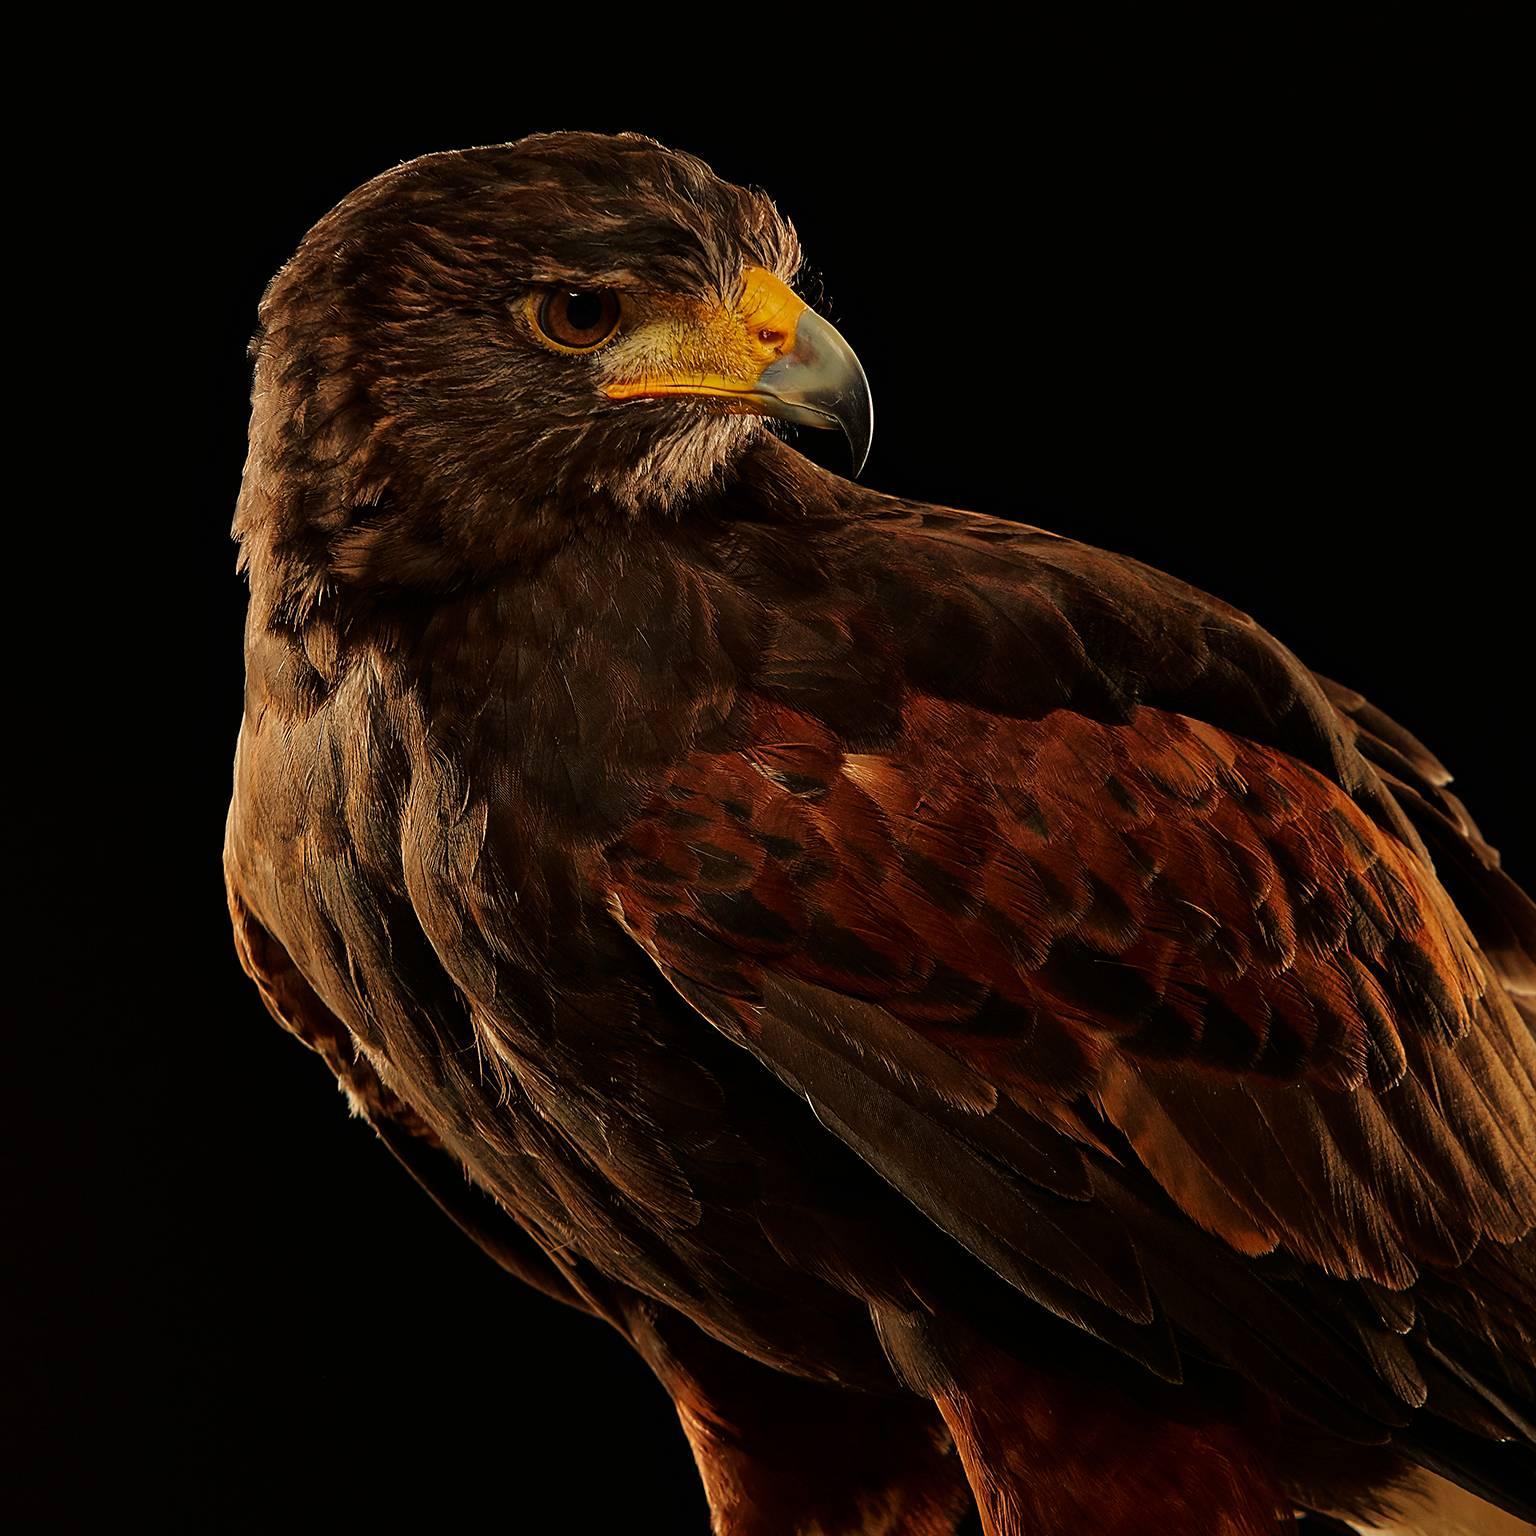 Birds of Prey Harris' Hawk No. 1 - Photograph by Chris Gordaneer